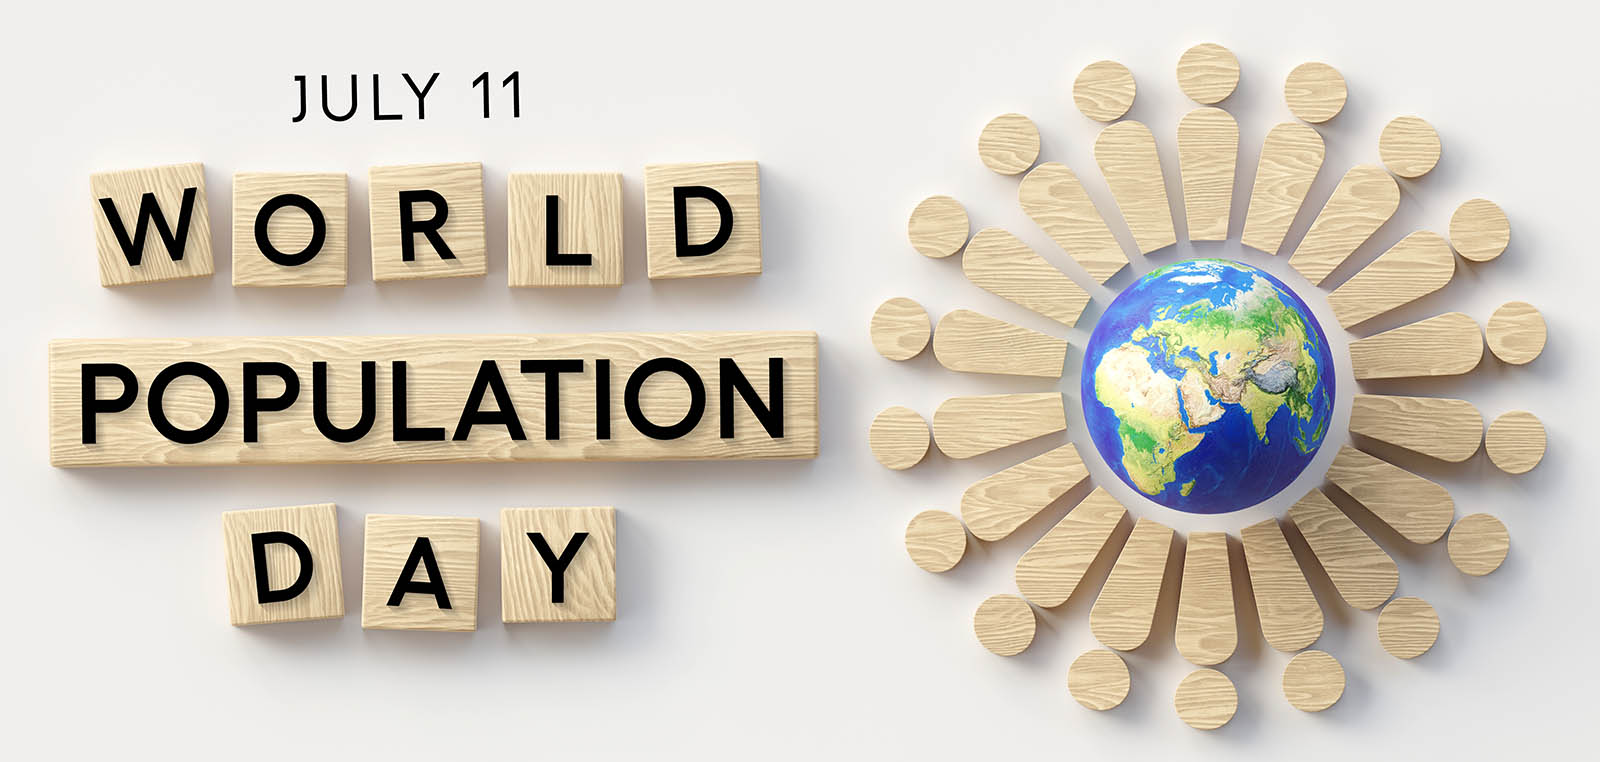 11 JULY – WORLD POPULATION DAY